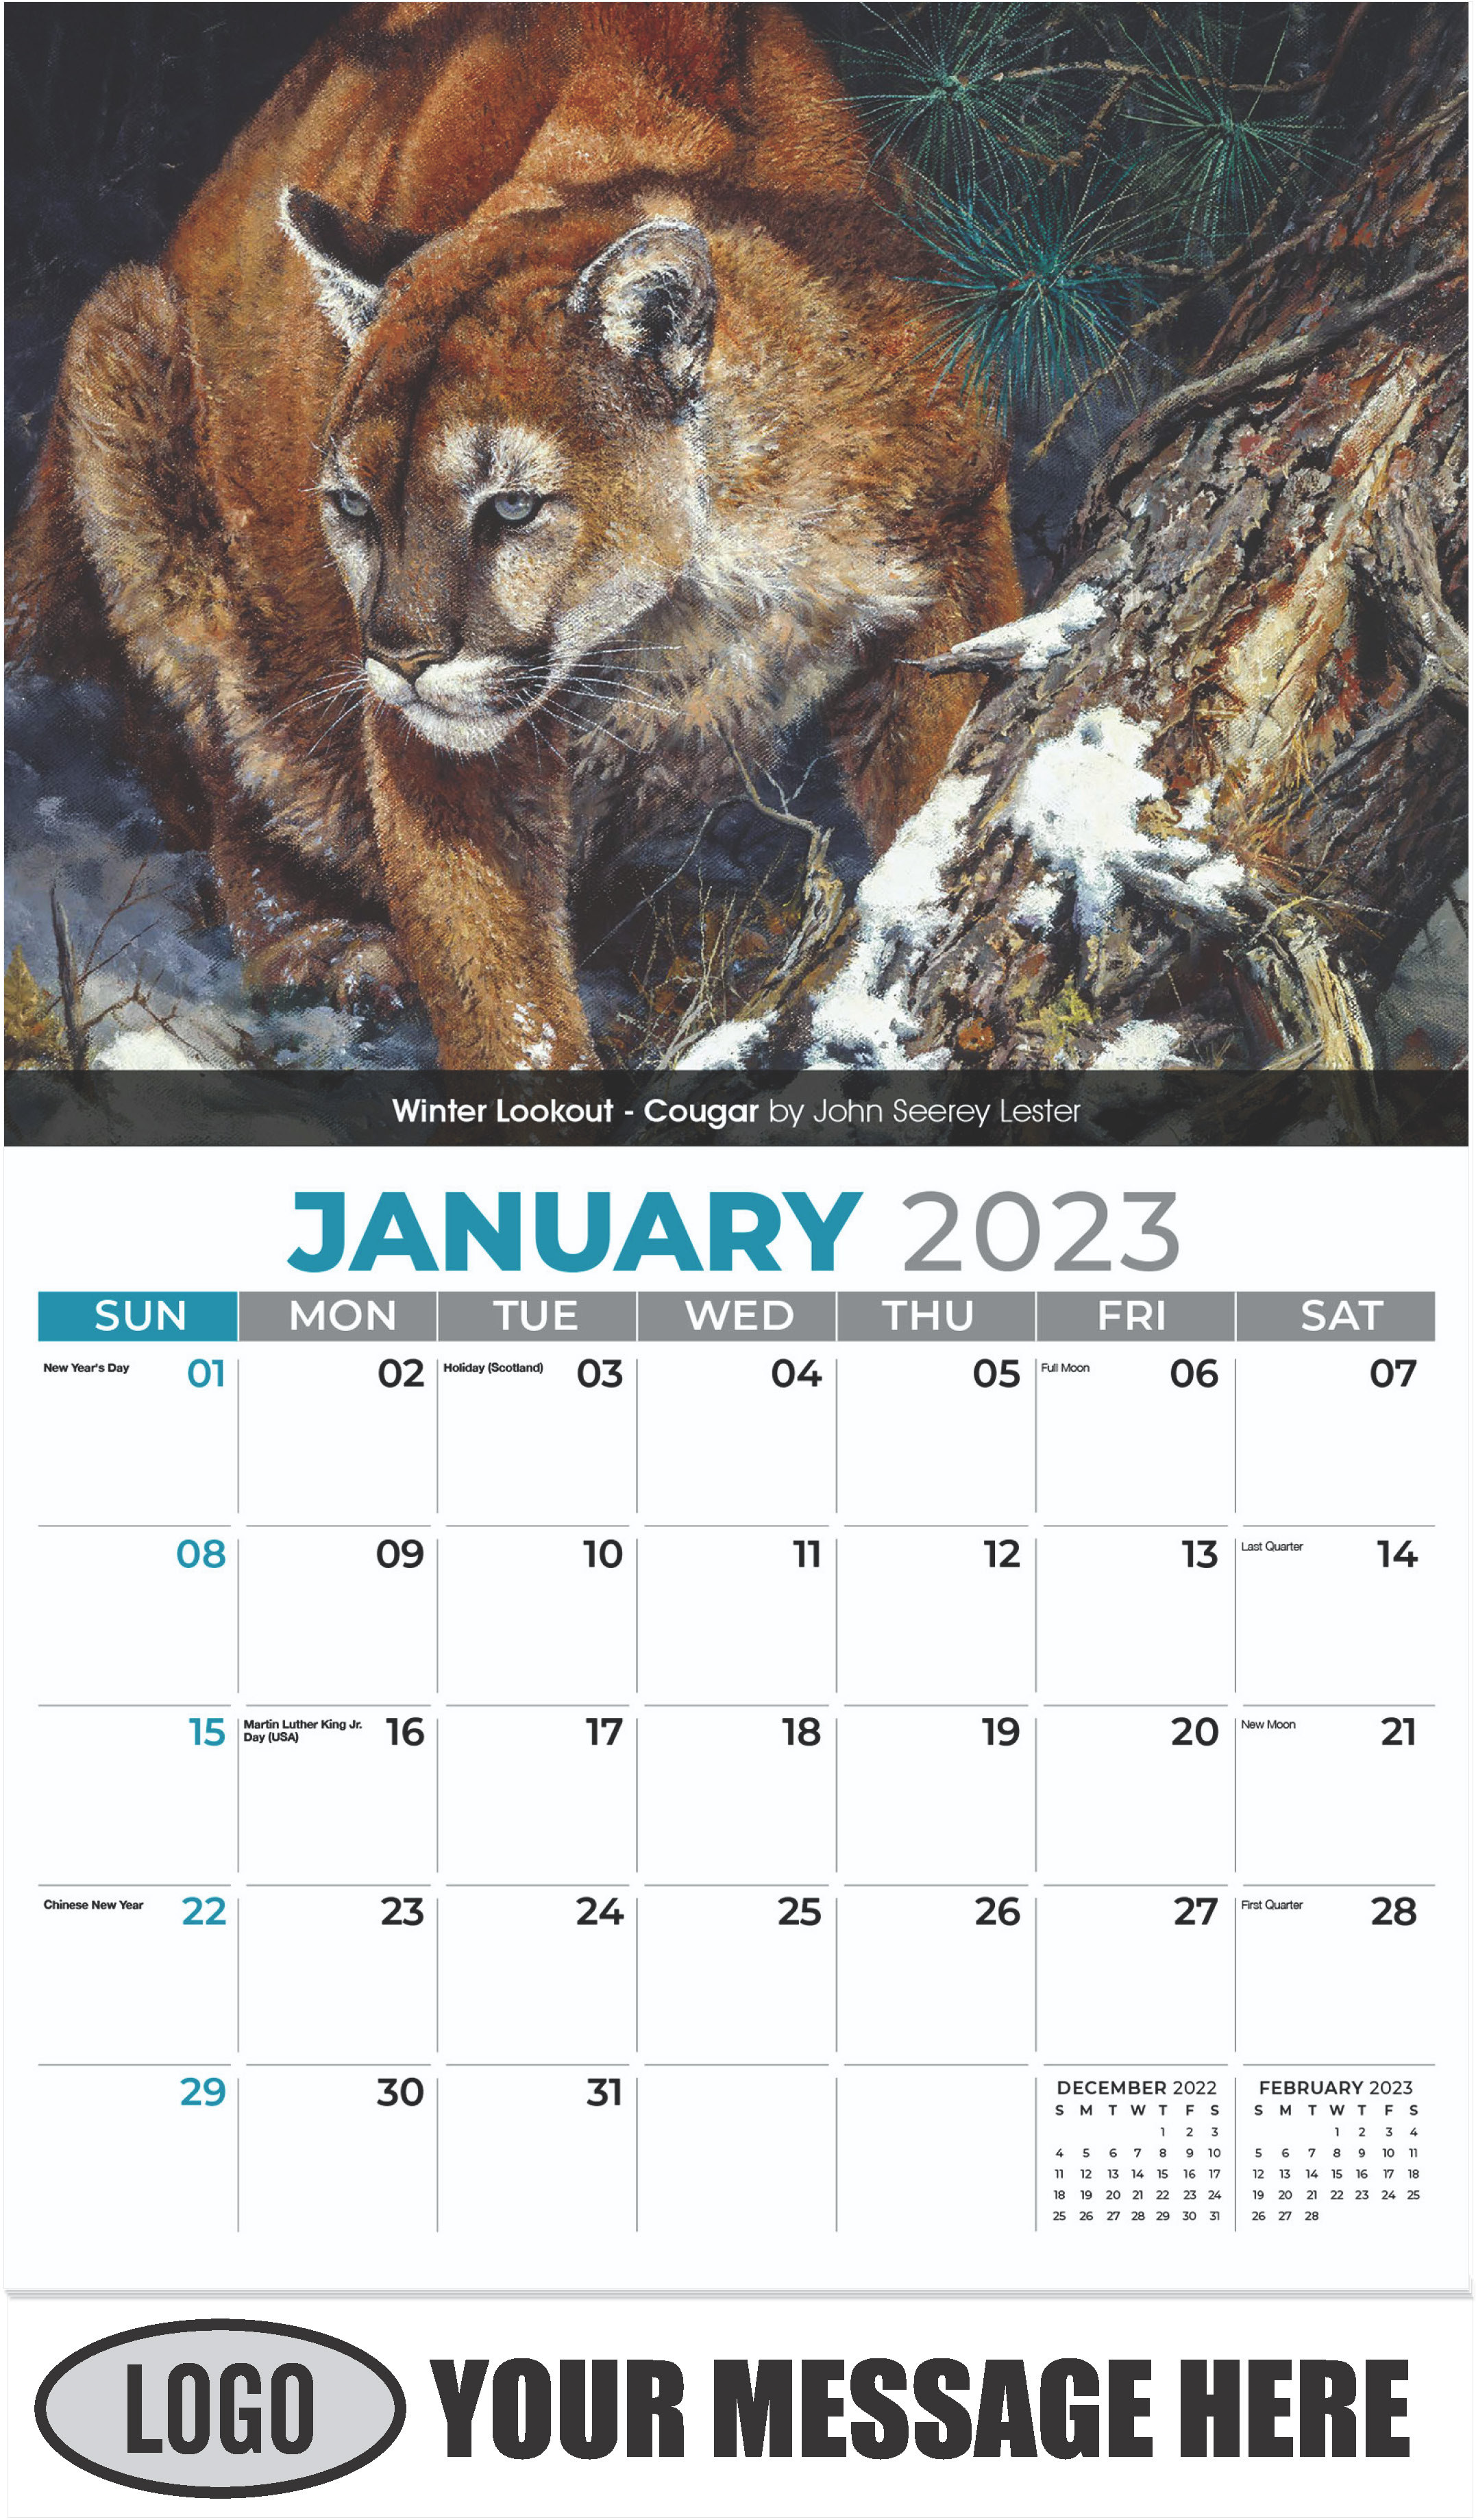 1 Wildlife Winter Lookout Cougar by John Seerey Lester - January - Wildlife Portraits 2023 Promotional Calendar